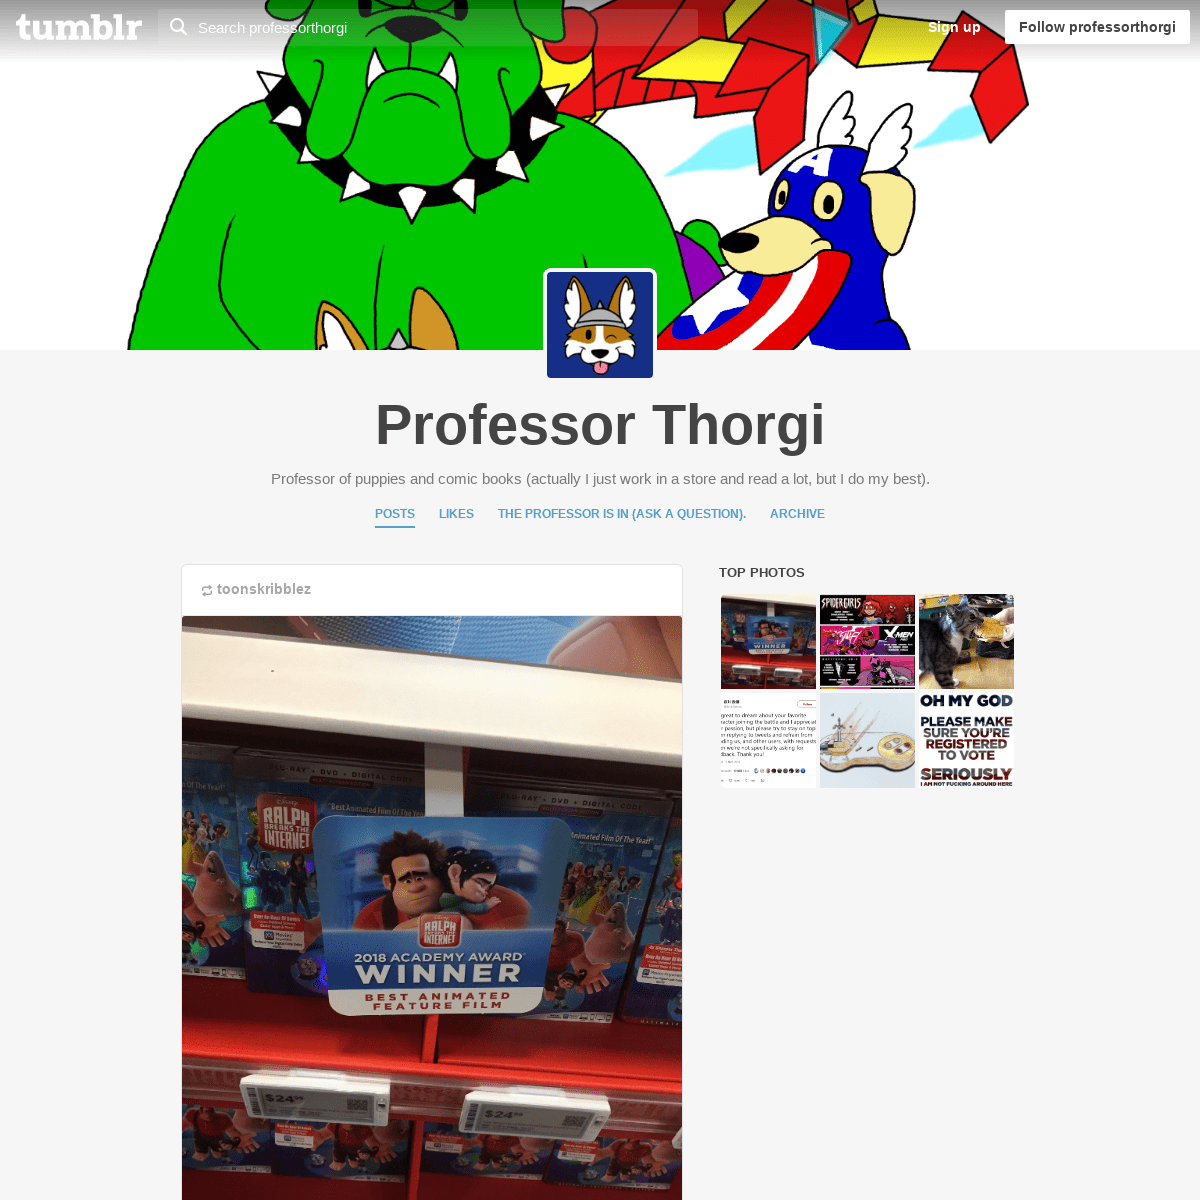 Professor Thorgi